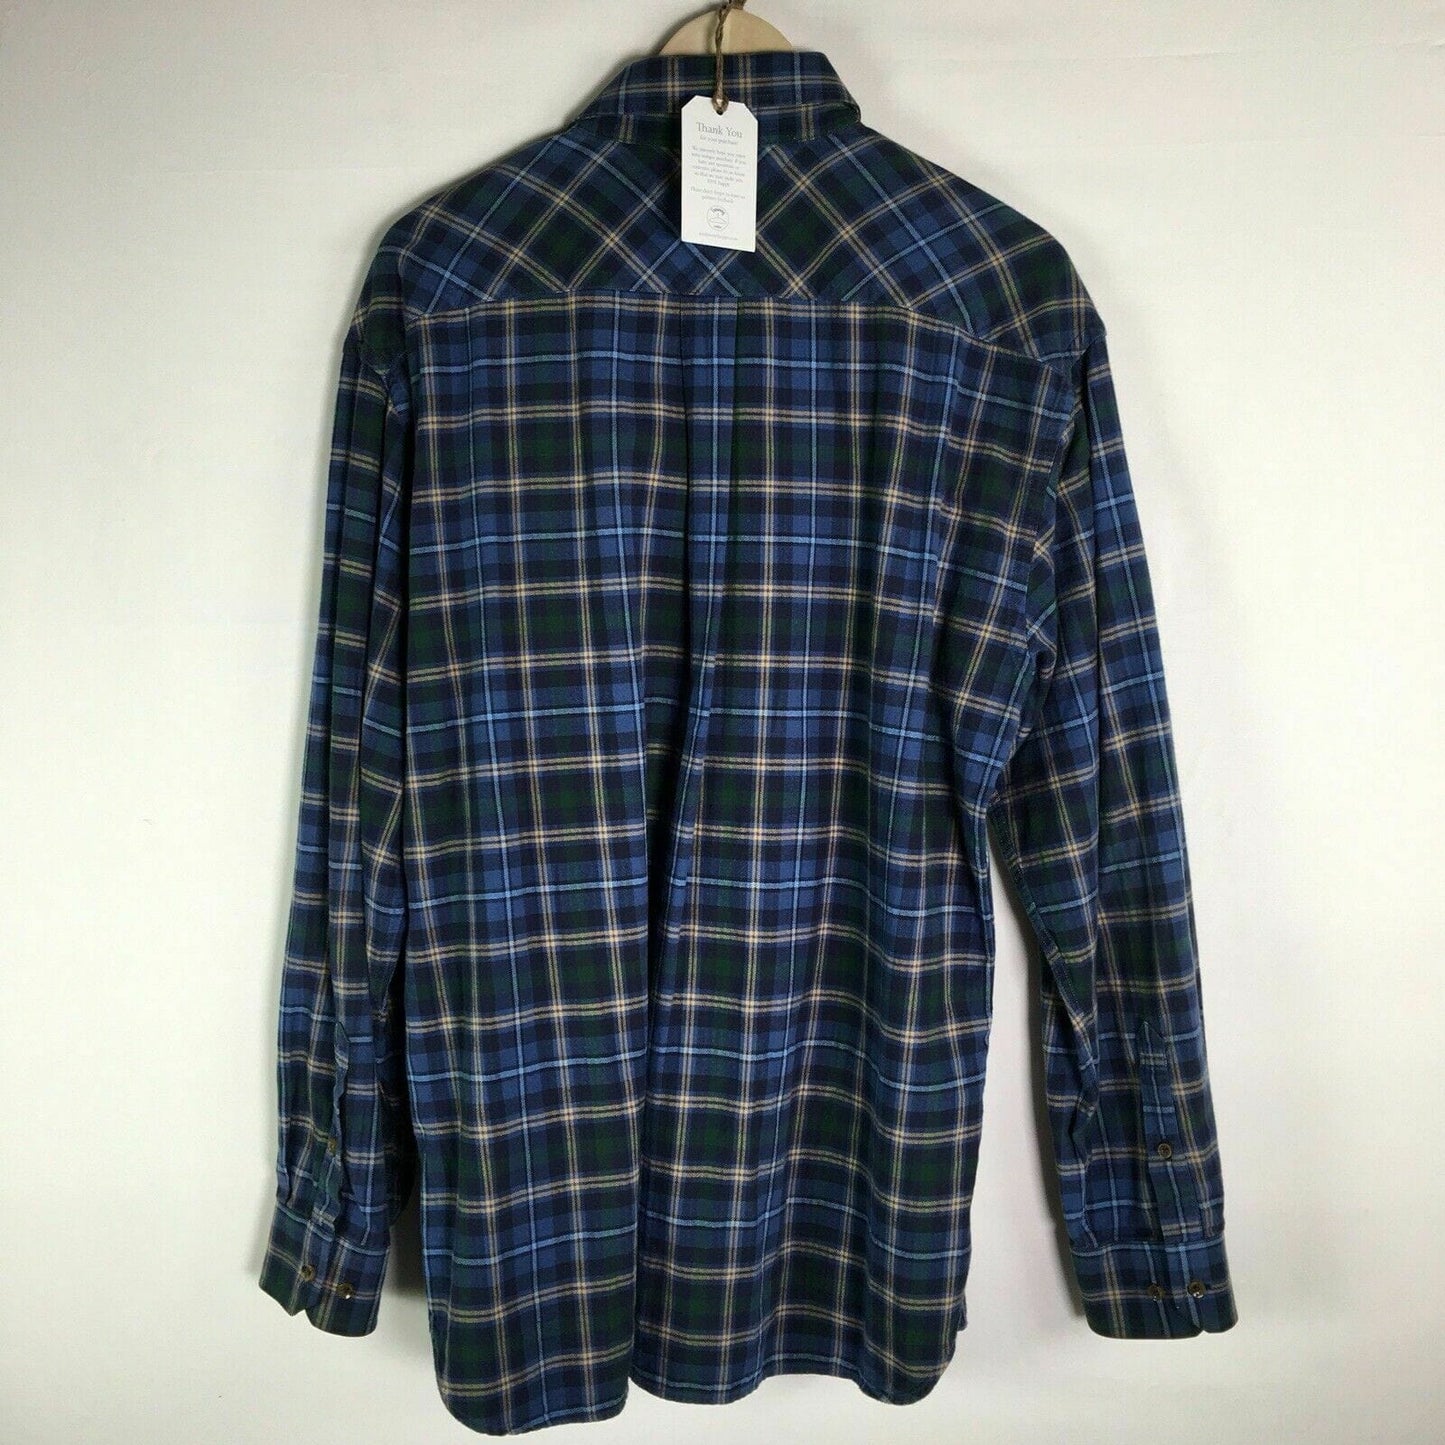 Stand Out Tommy Hilfiger Vintage Plaid Shirt Durable Large Blue Flannel